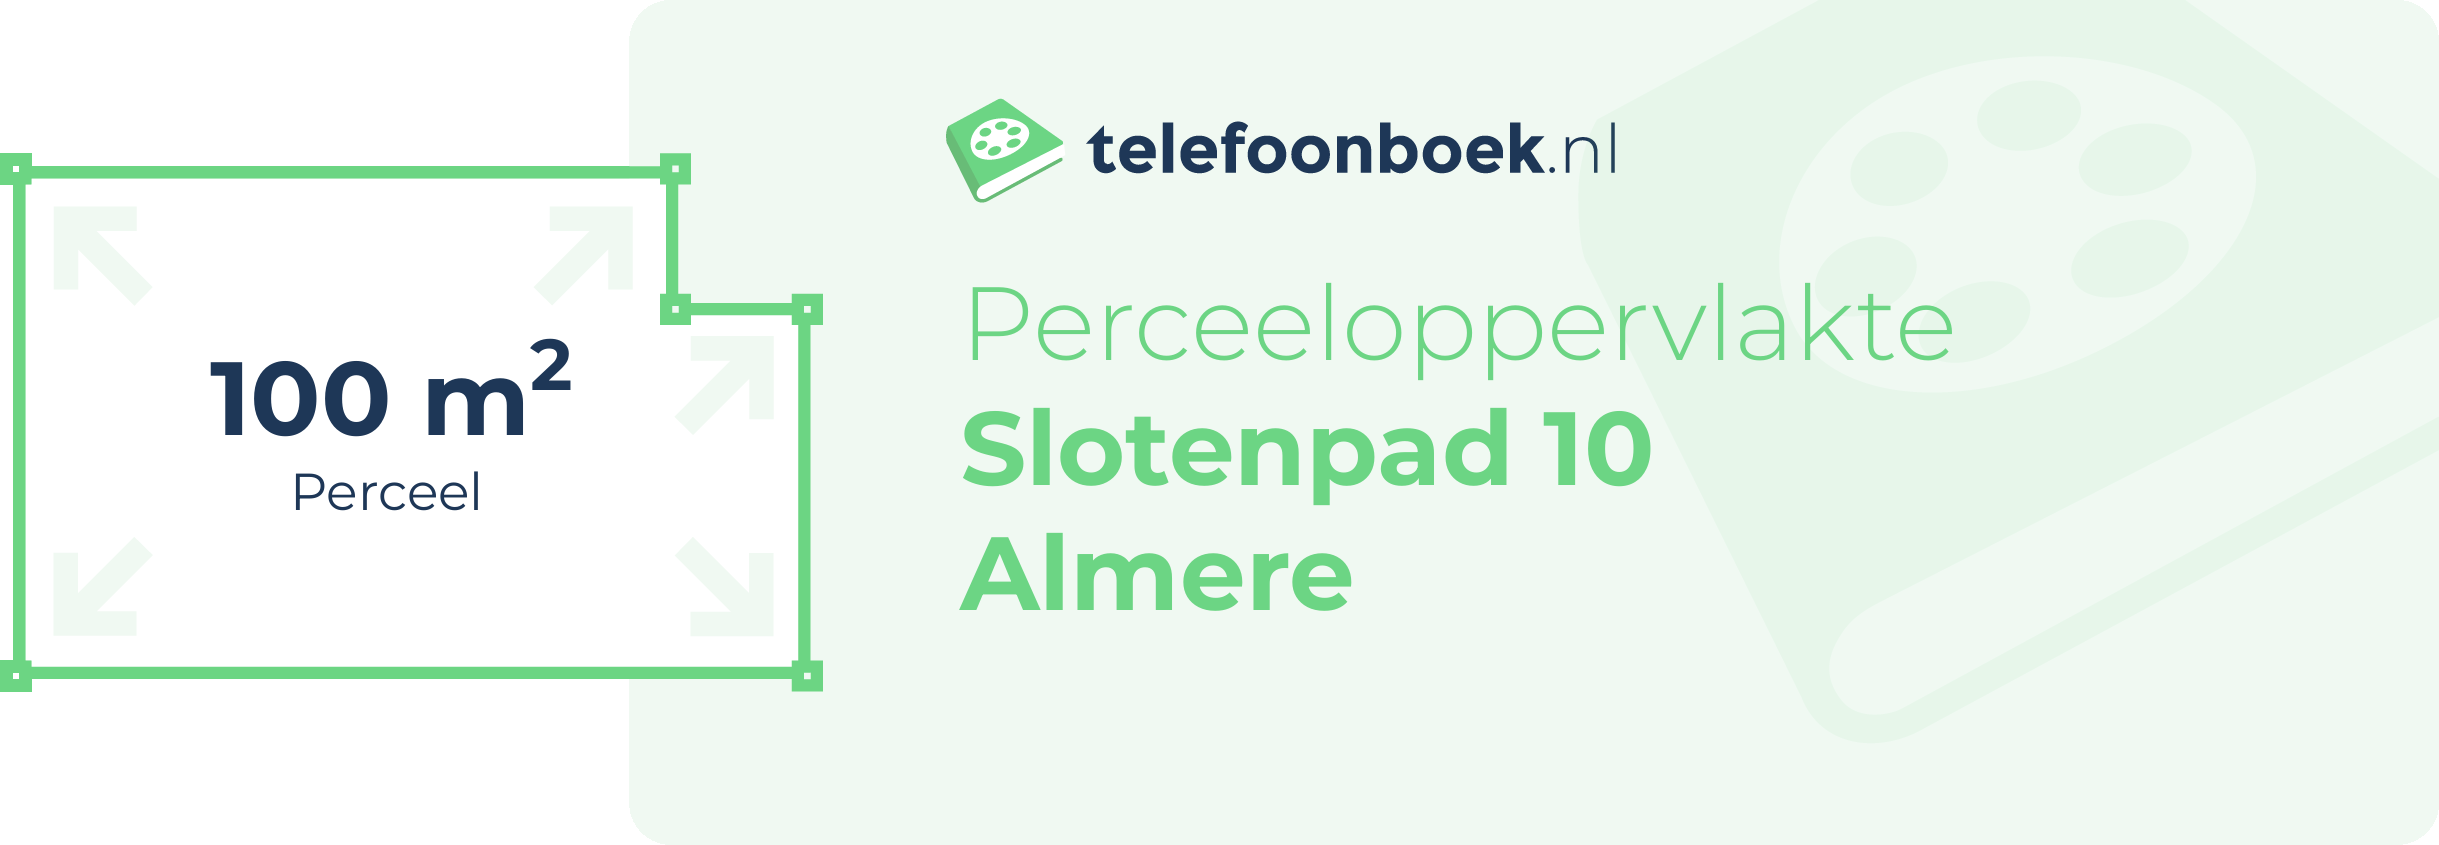 Perceeloppervlakte Slotenpad 10 Almere